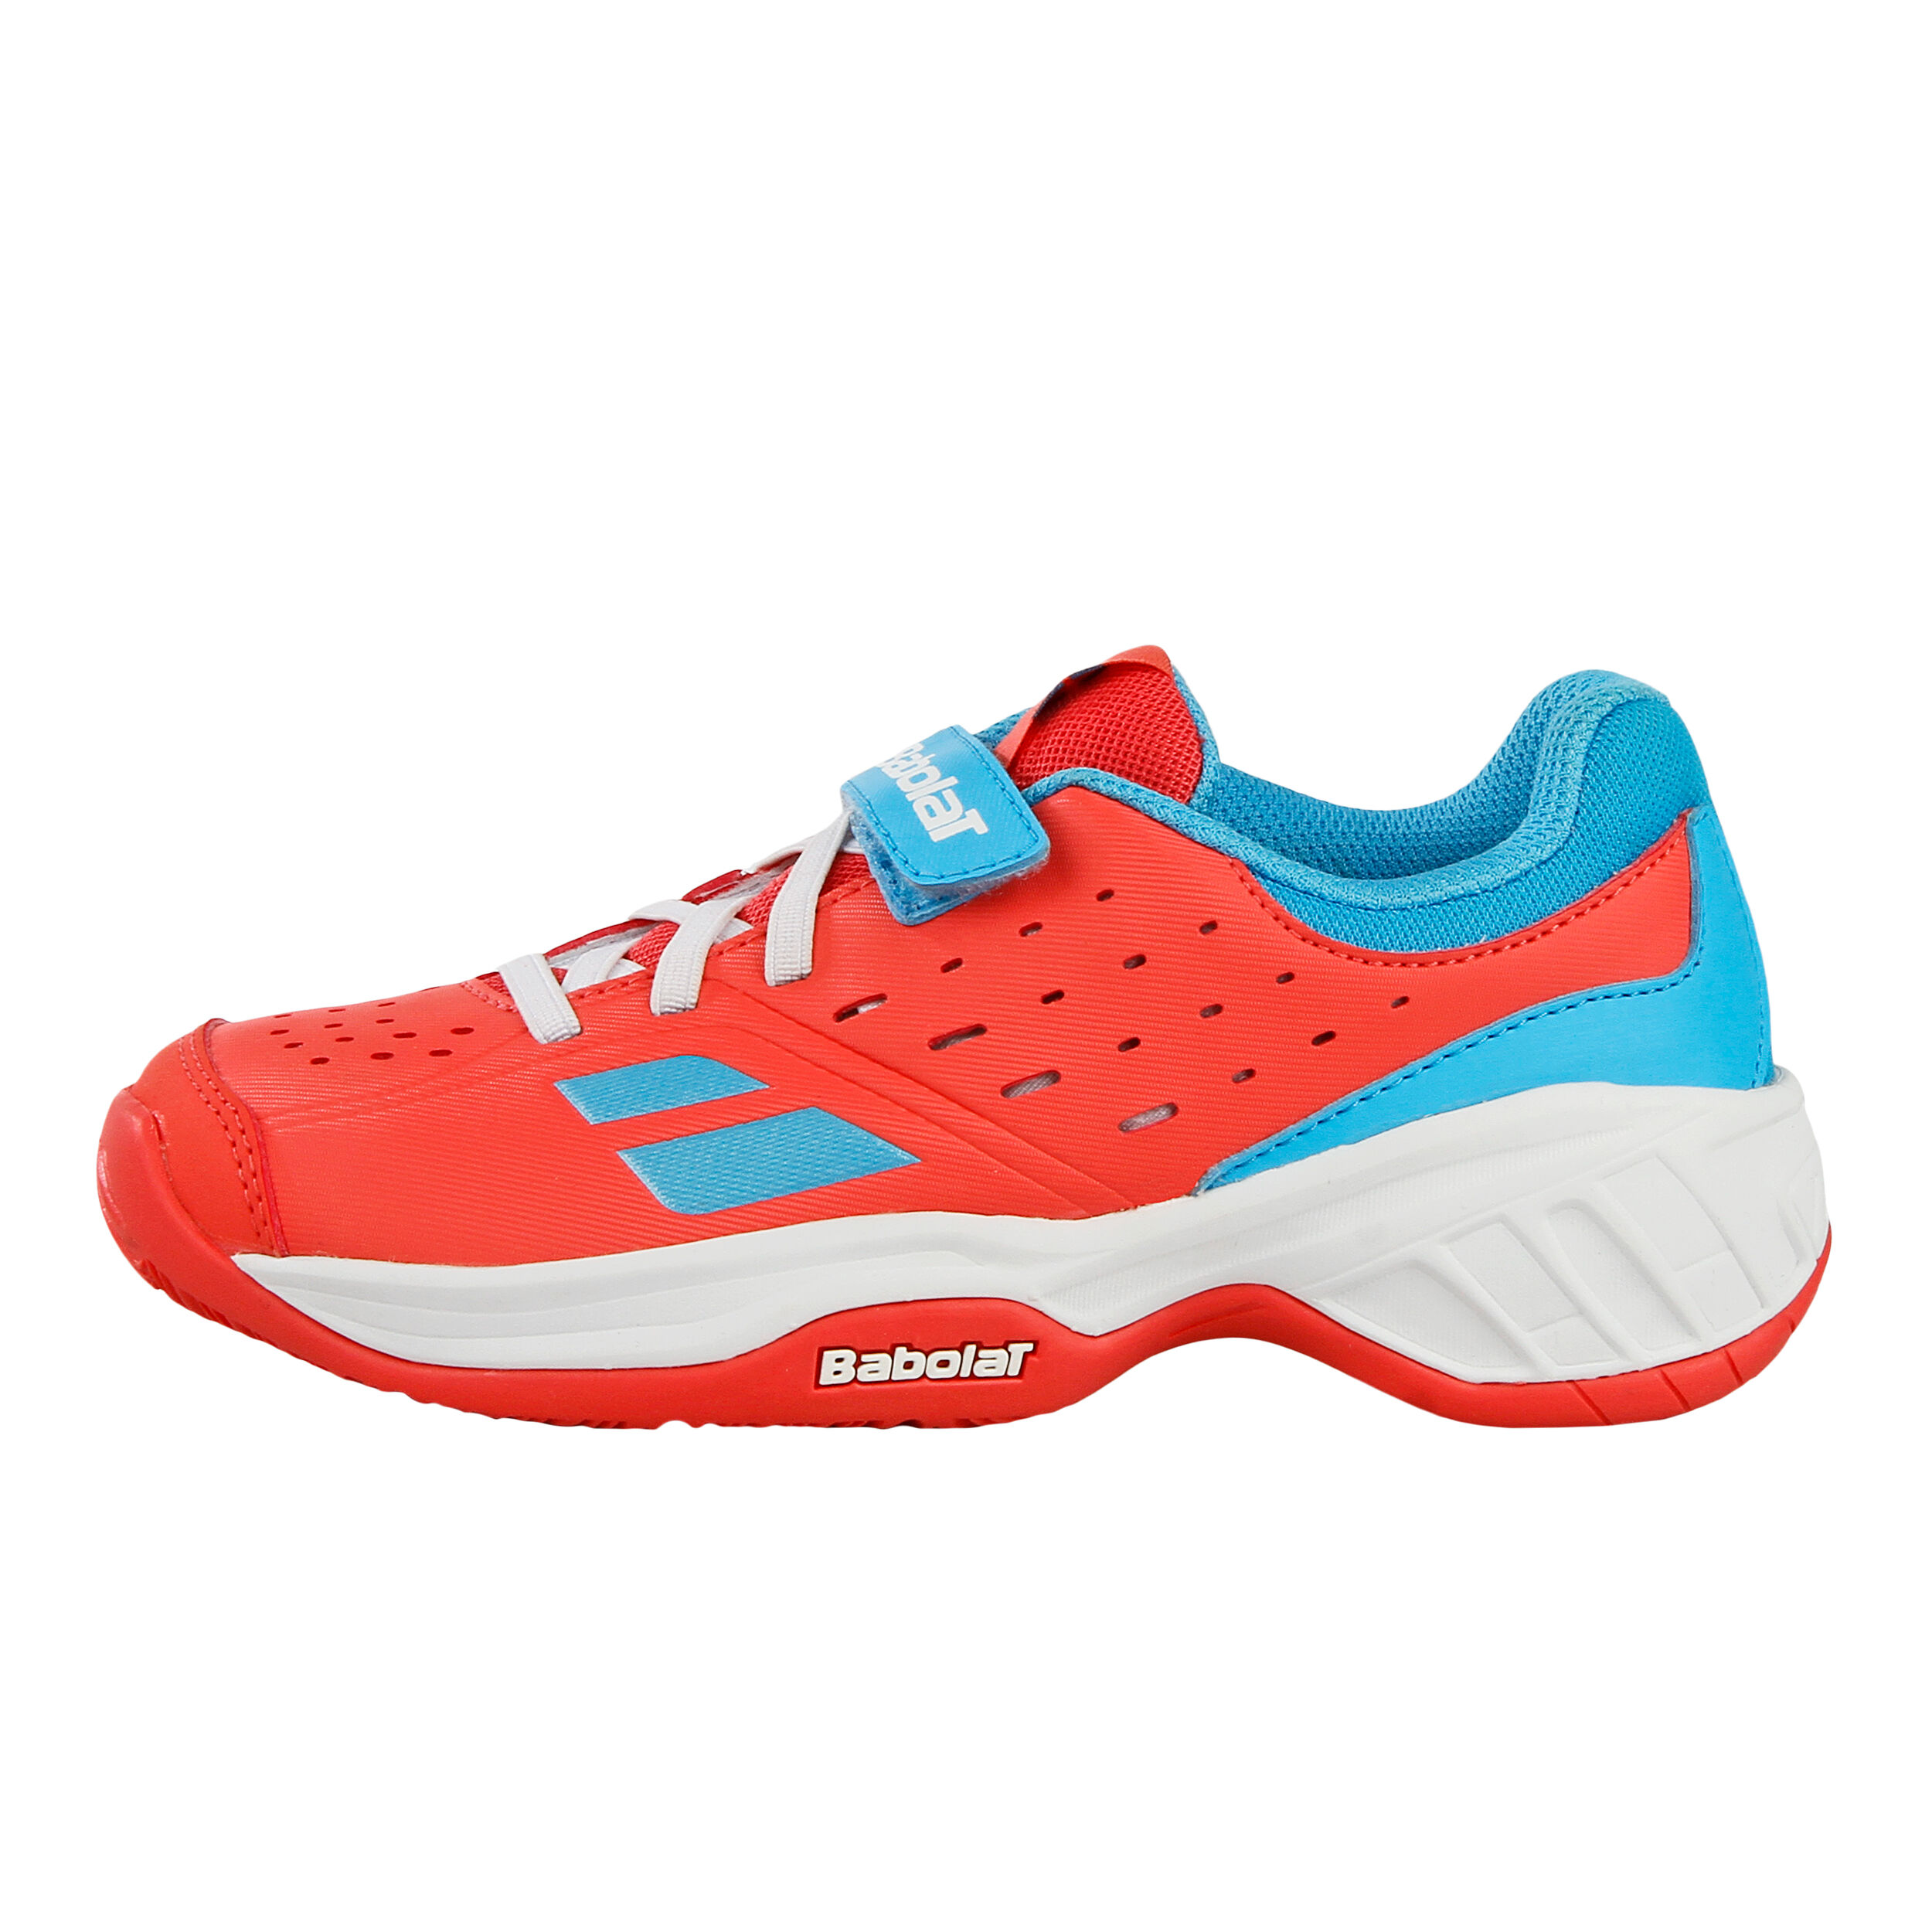 Babolat Unisex's Pulsion Allcourtschuh Kinder-Orange Hellblau Tennis Shoes 